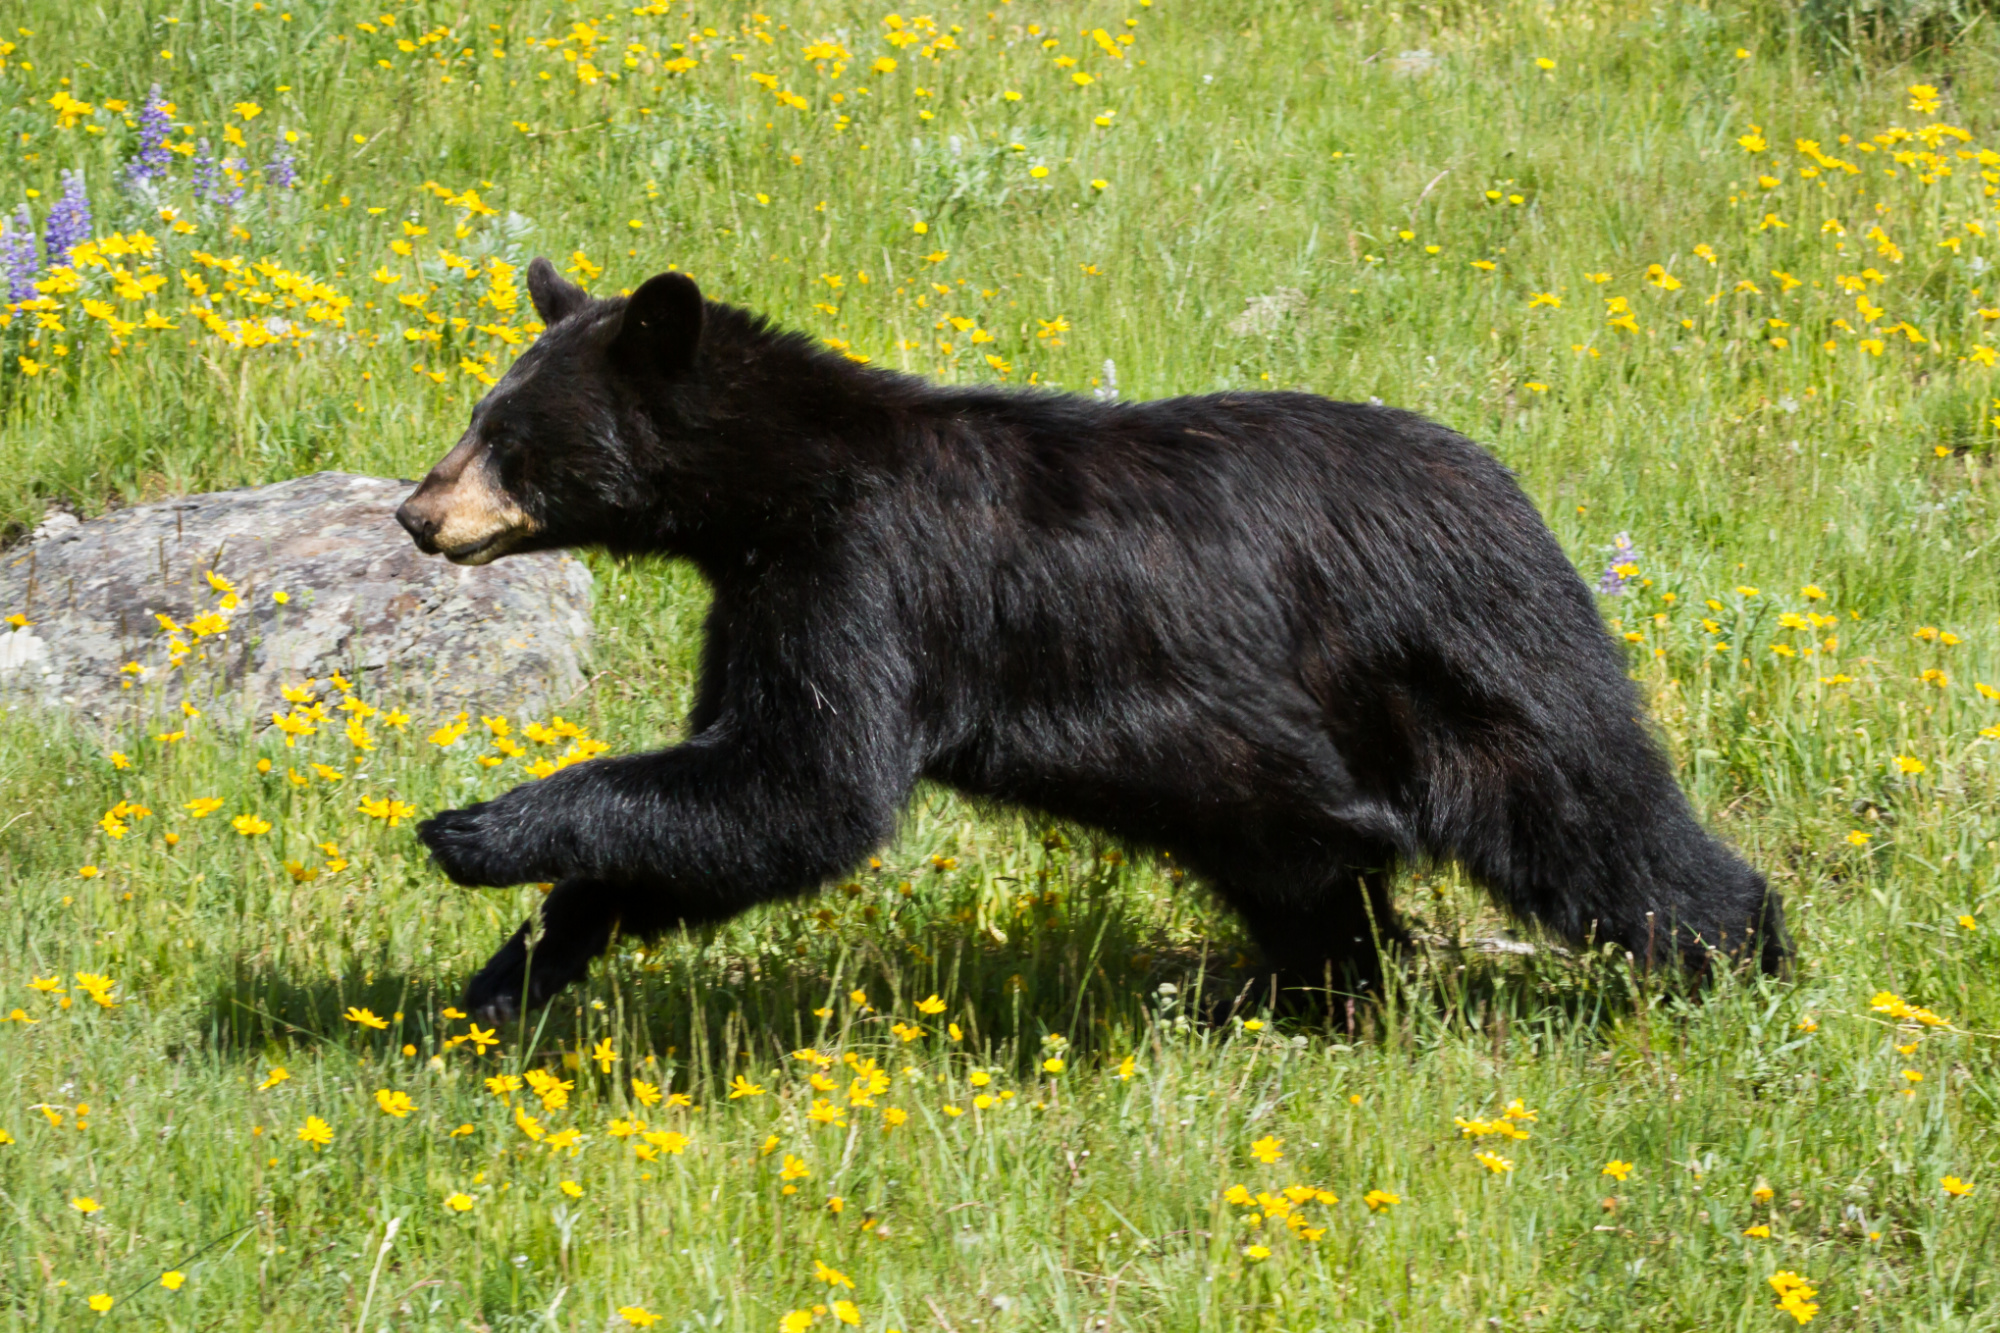 A black bear runs through a field of wildflowers.